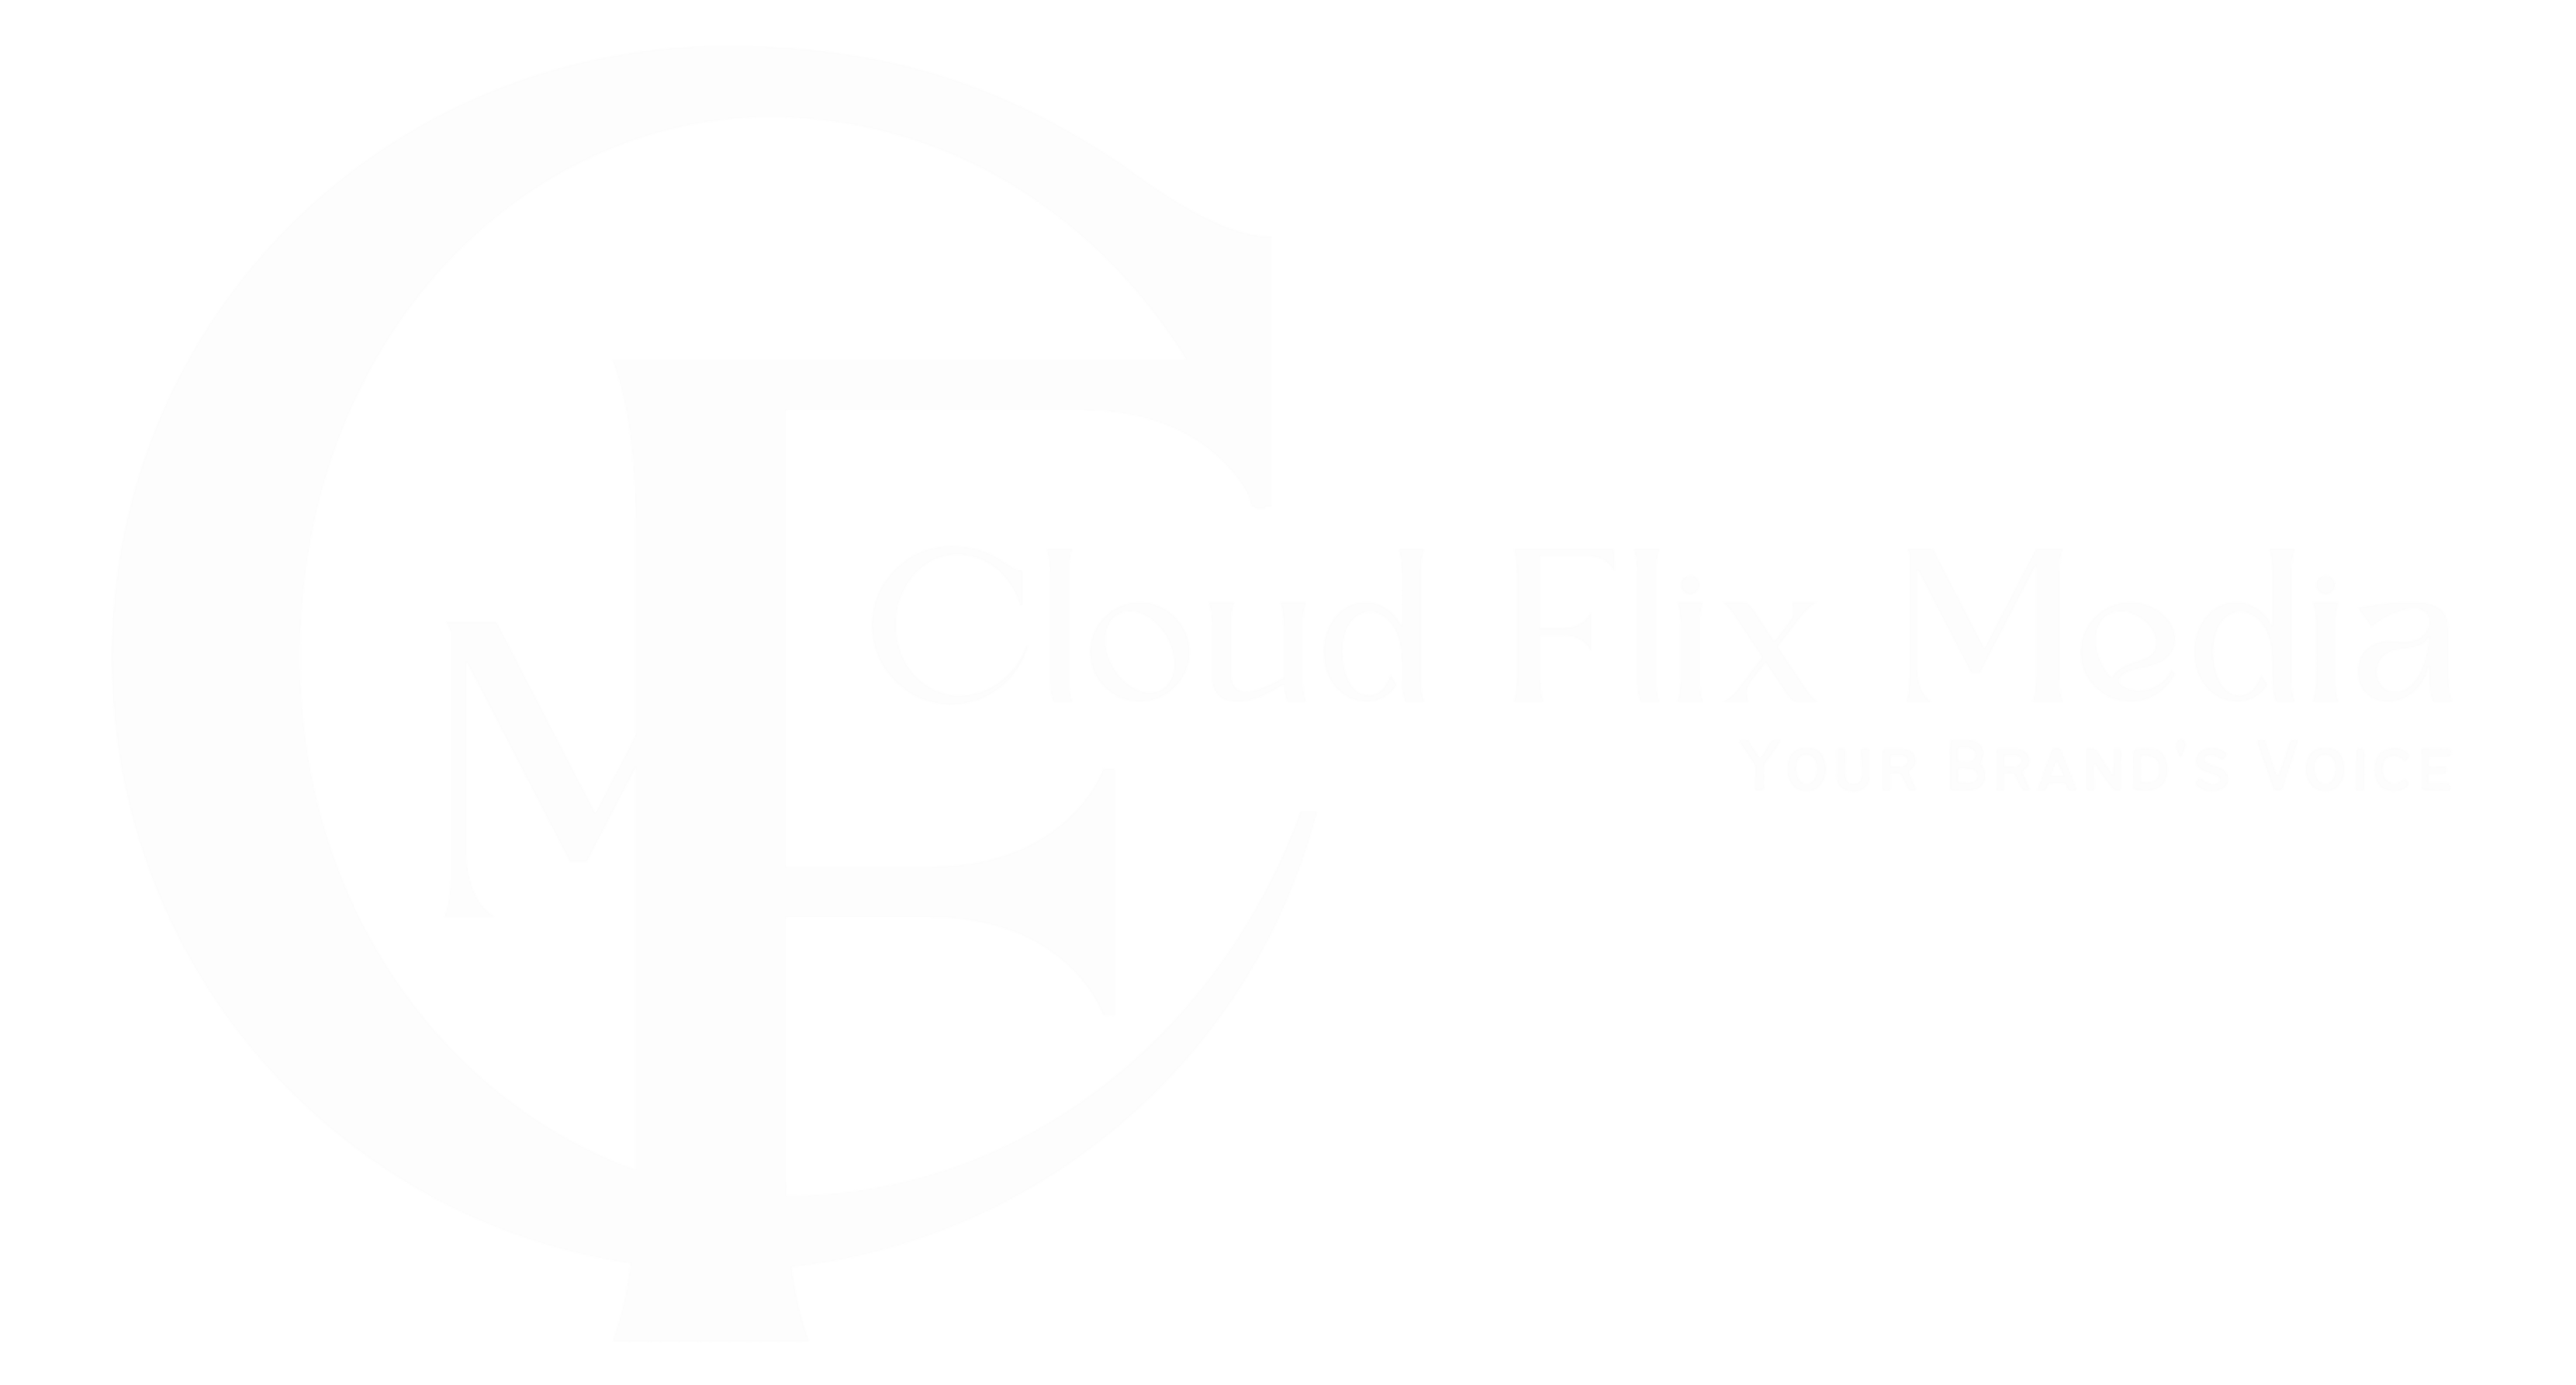 cloudflixmedia